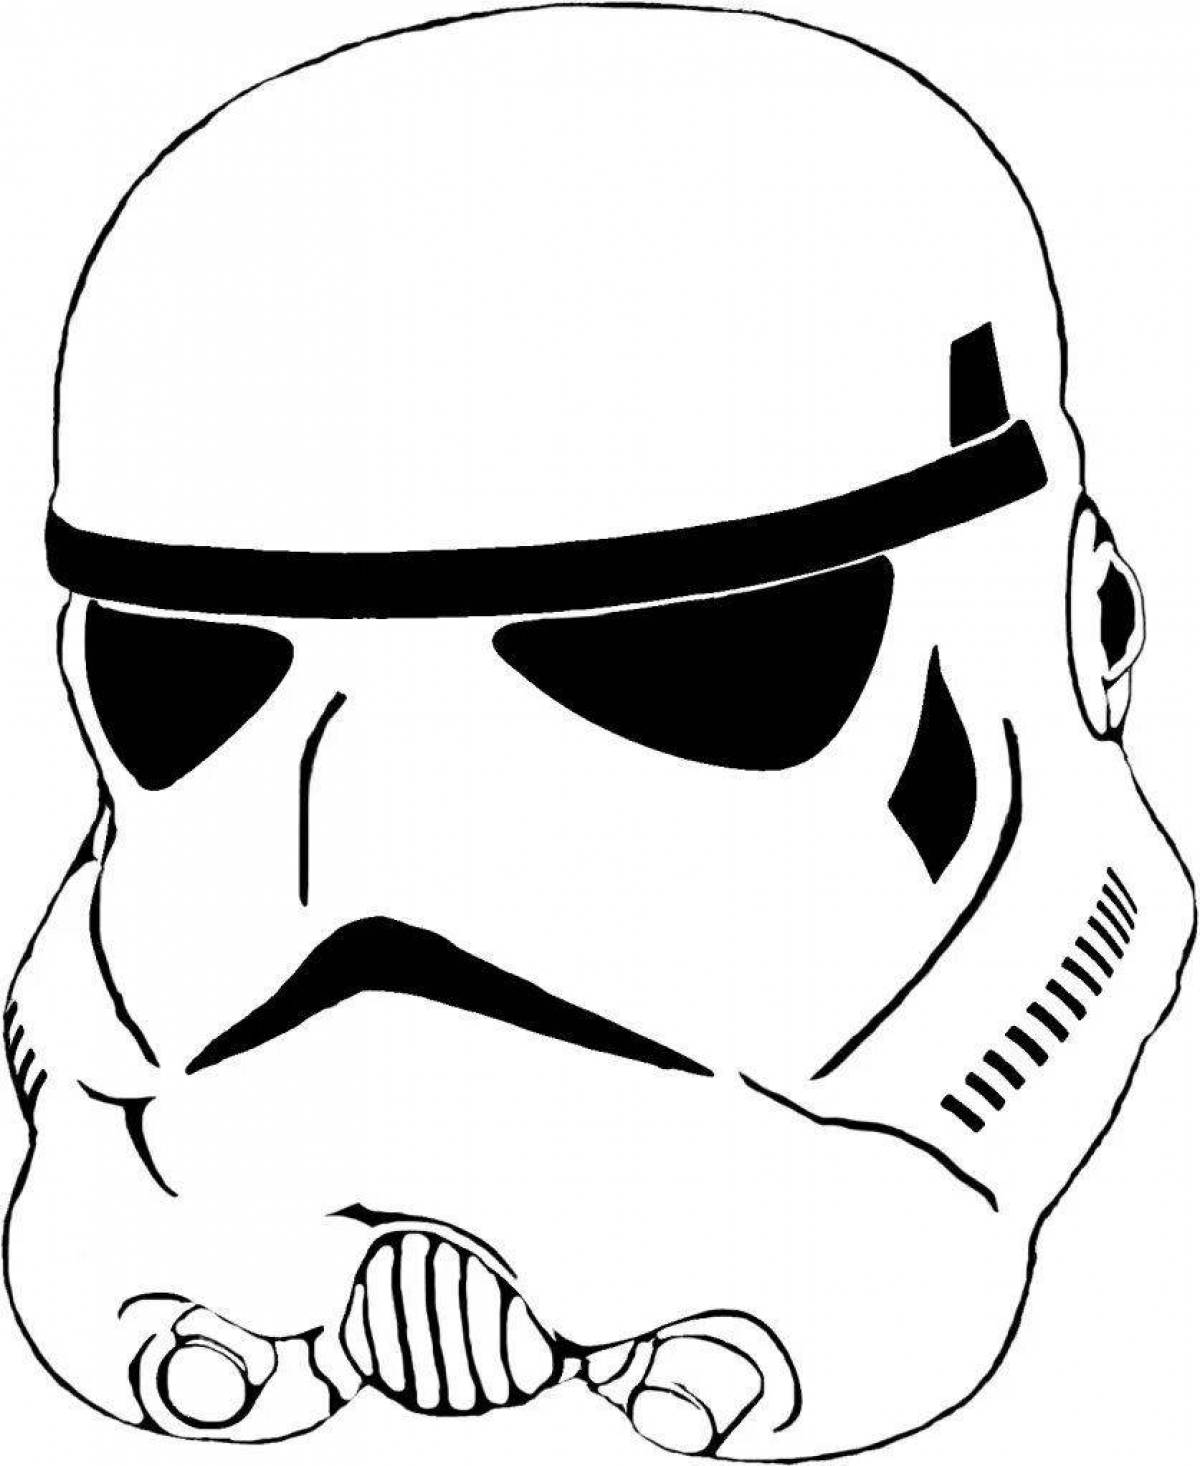 Star wars stormtrooper coloring book